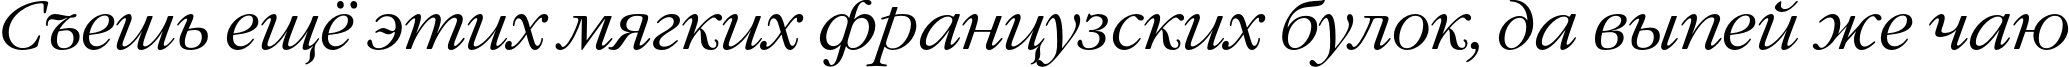 Пример написания шрифтом GaramondC Italic текста на русском